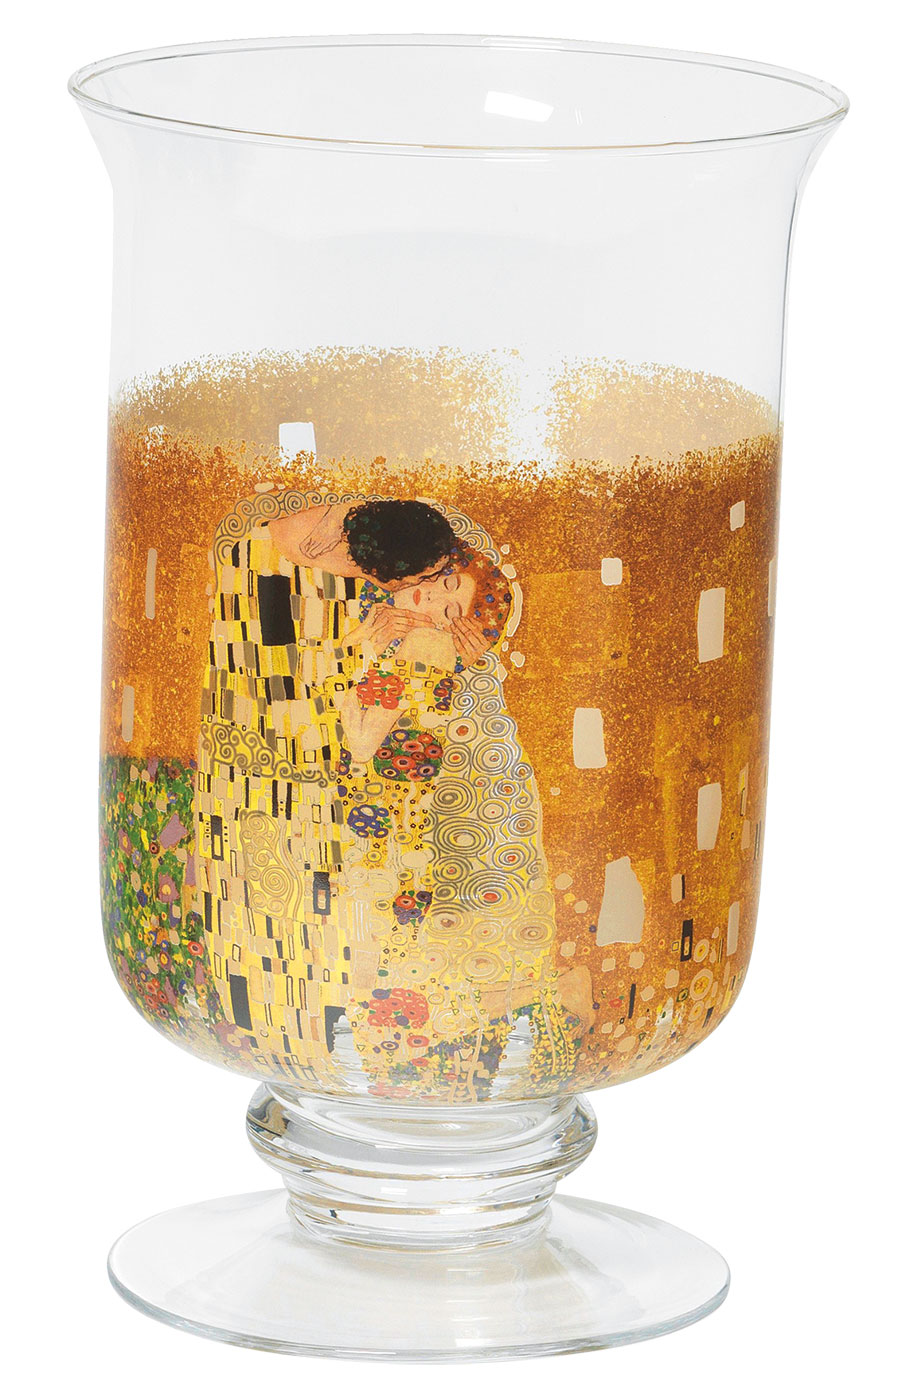 Table lantern / vase "The Kiss", glass by Gustav Klimt